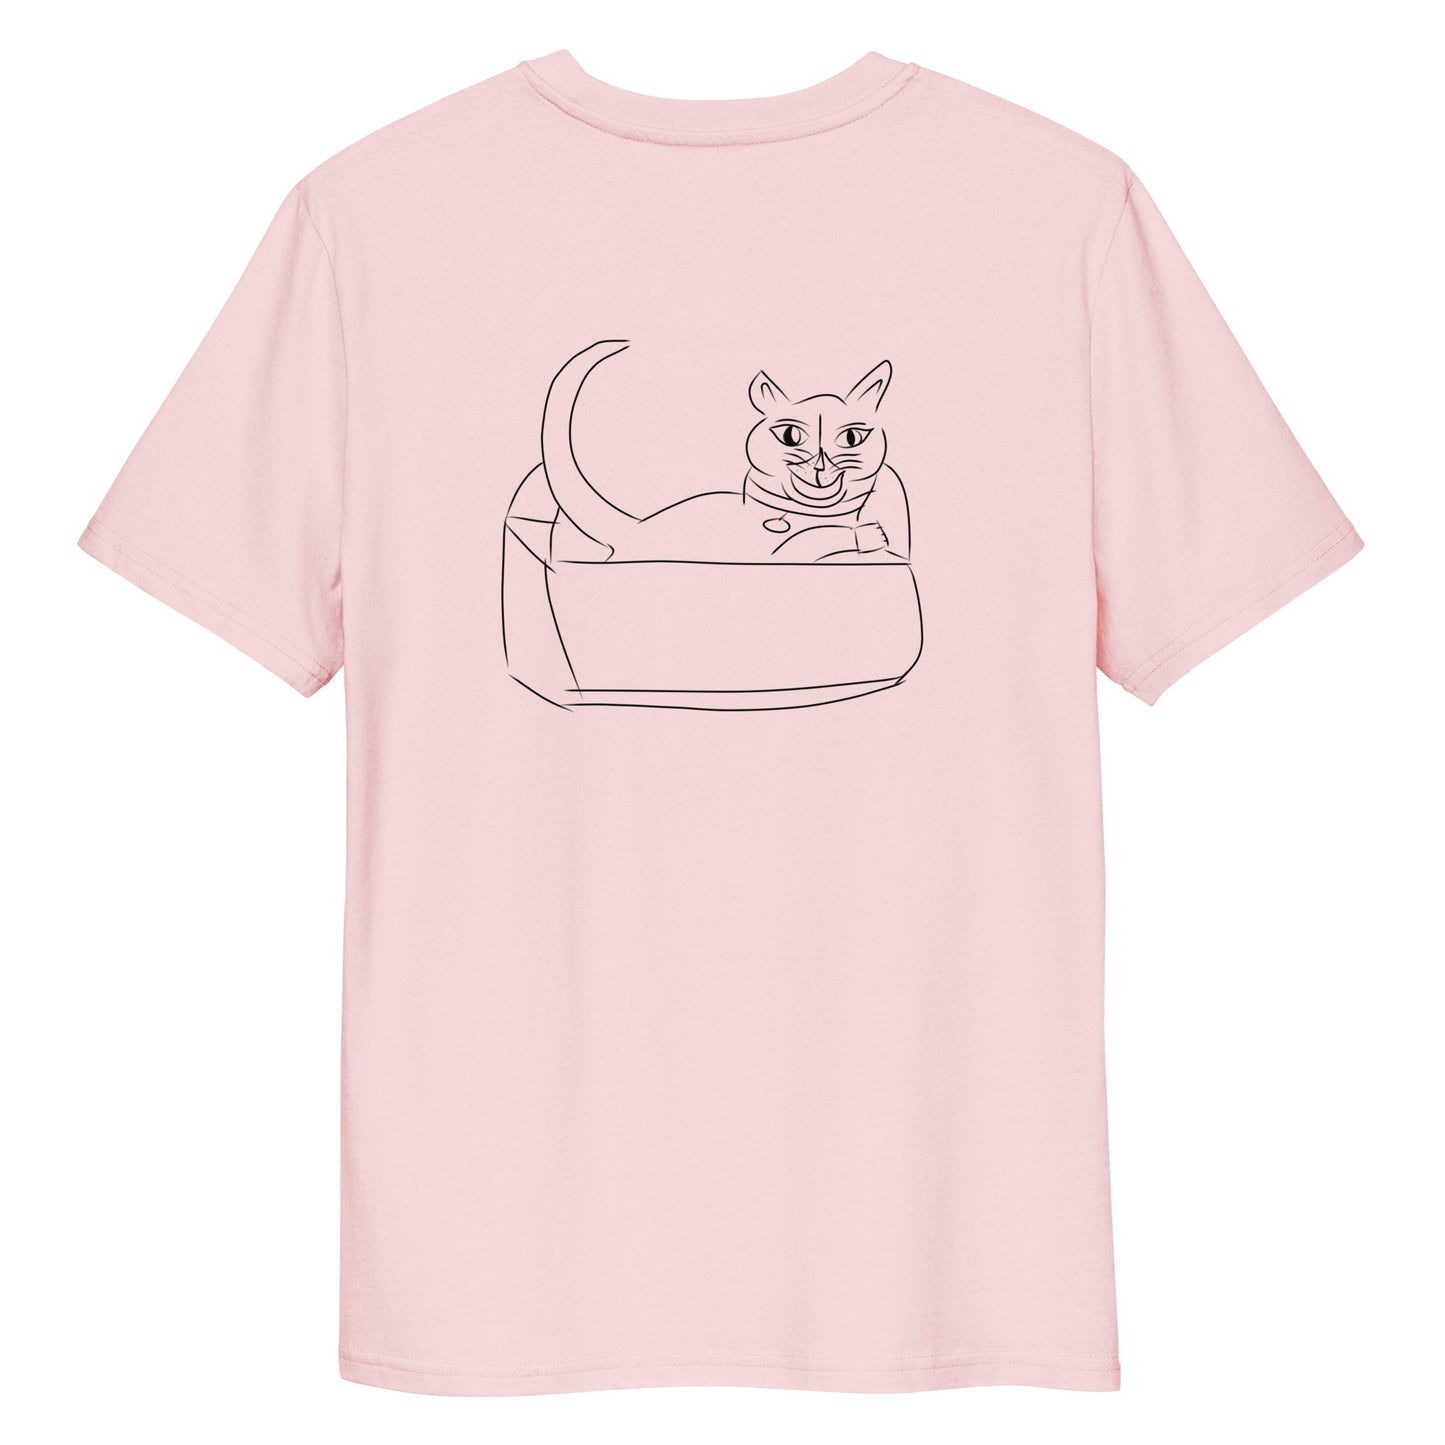 Cat Black | 100% Organic Cotton T Shirt in pink back